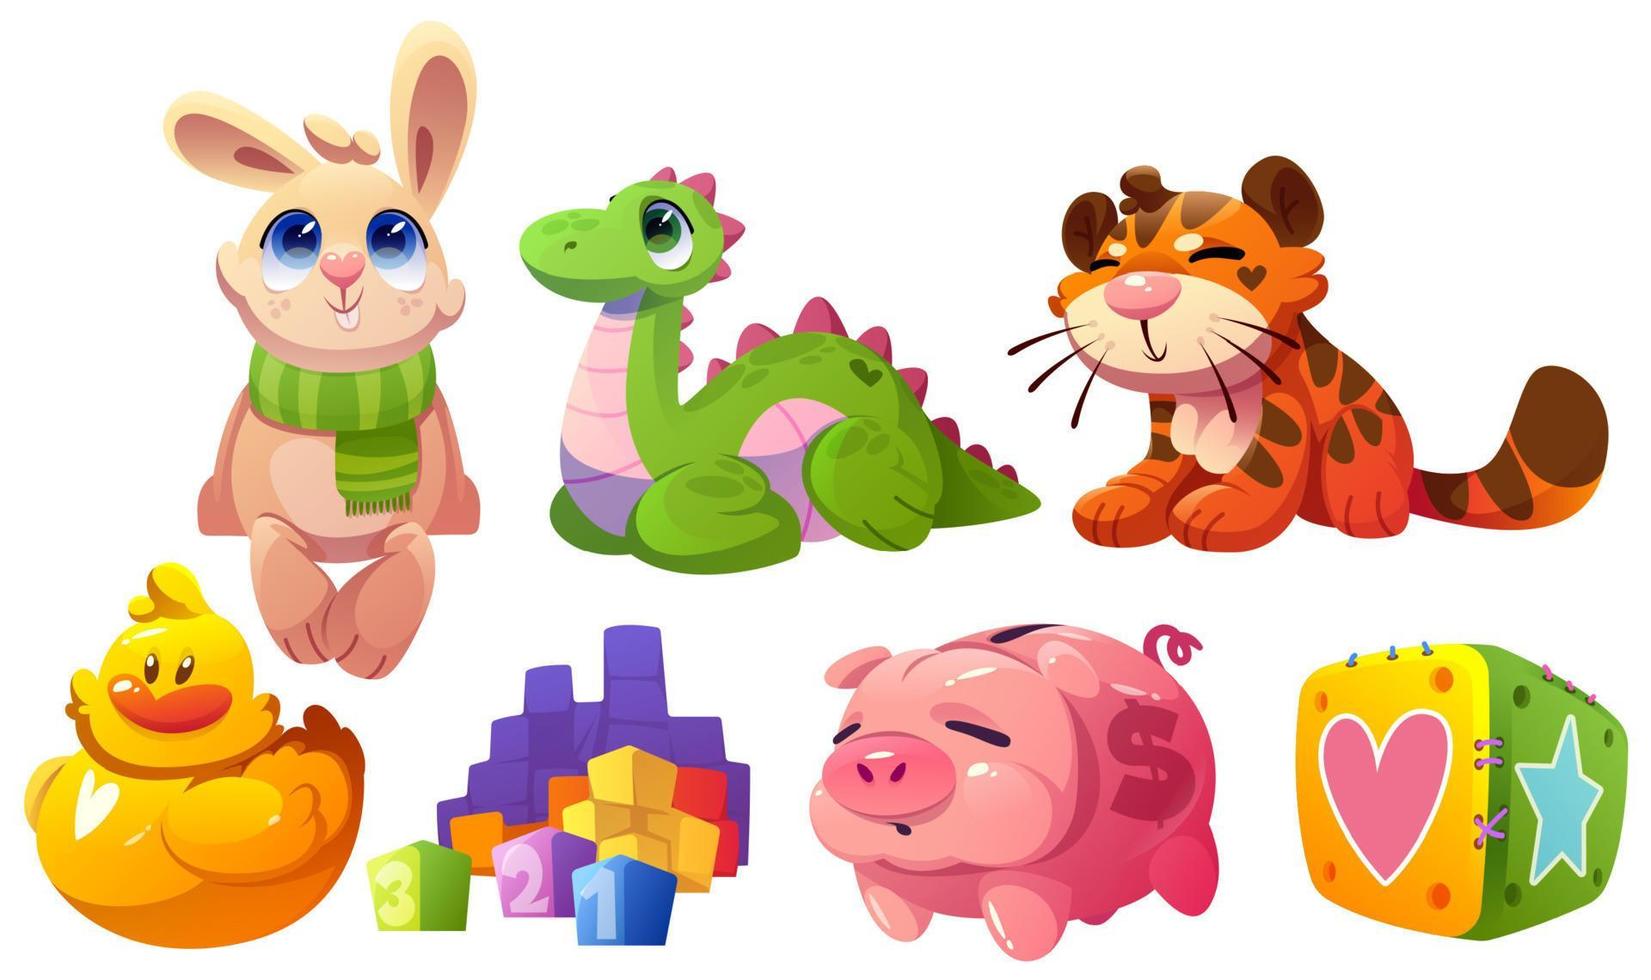 Kids toys funny plush soft tiger, bunny, dinosaur vector